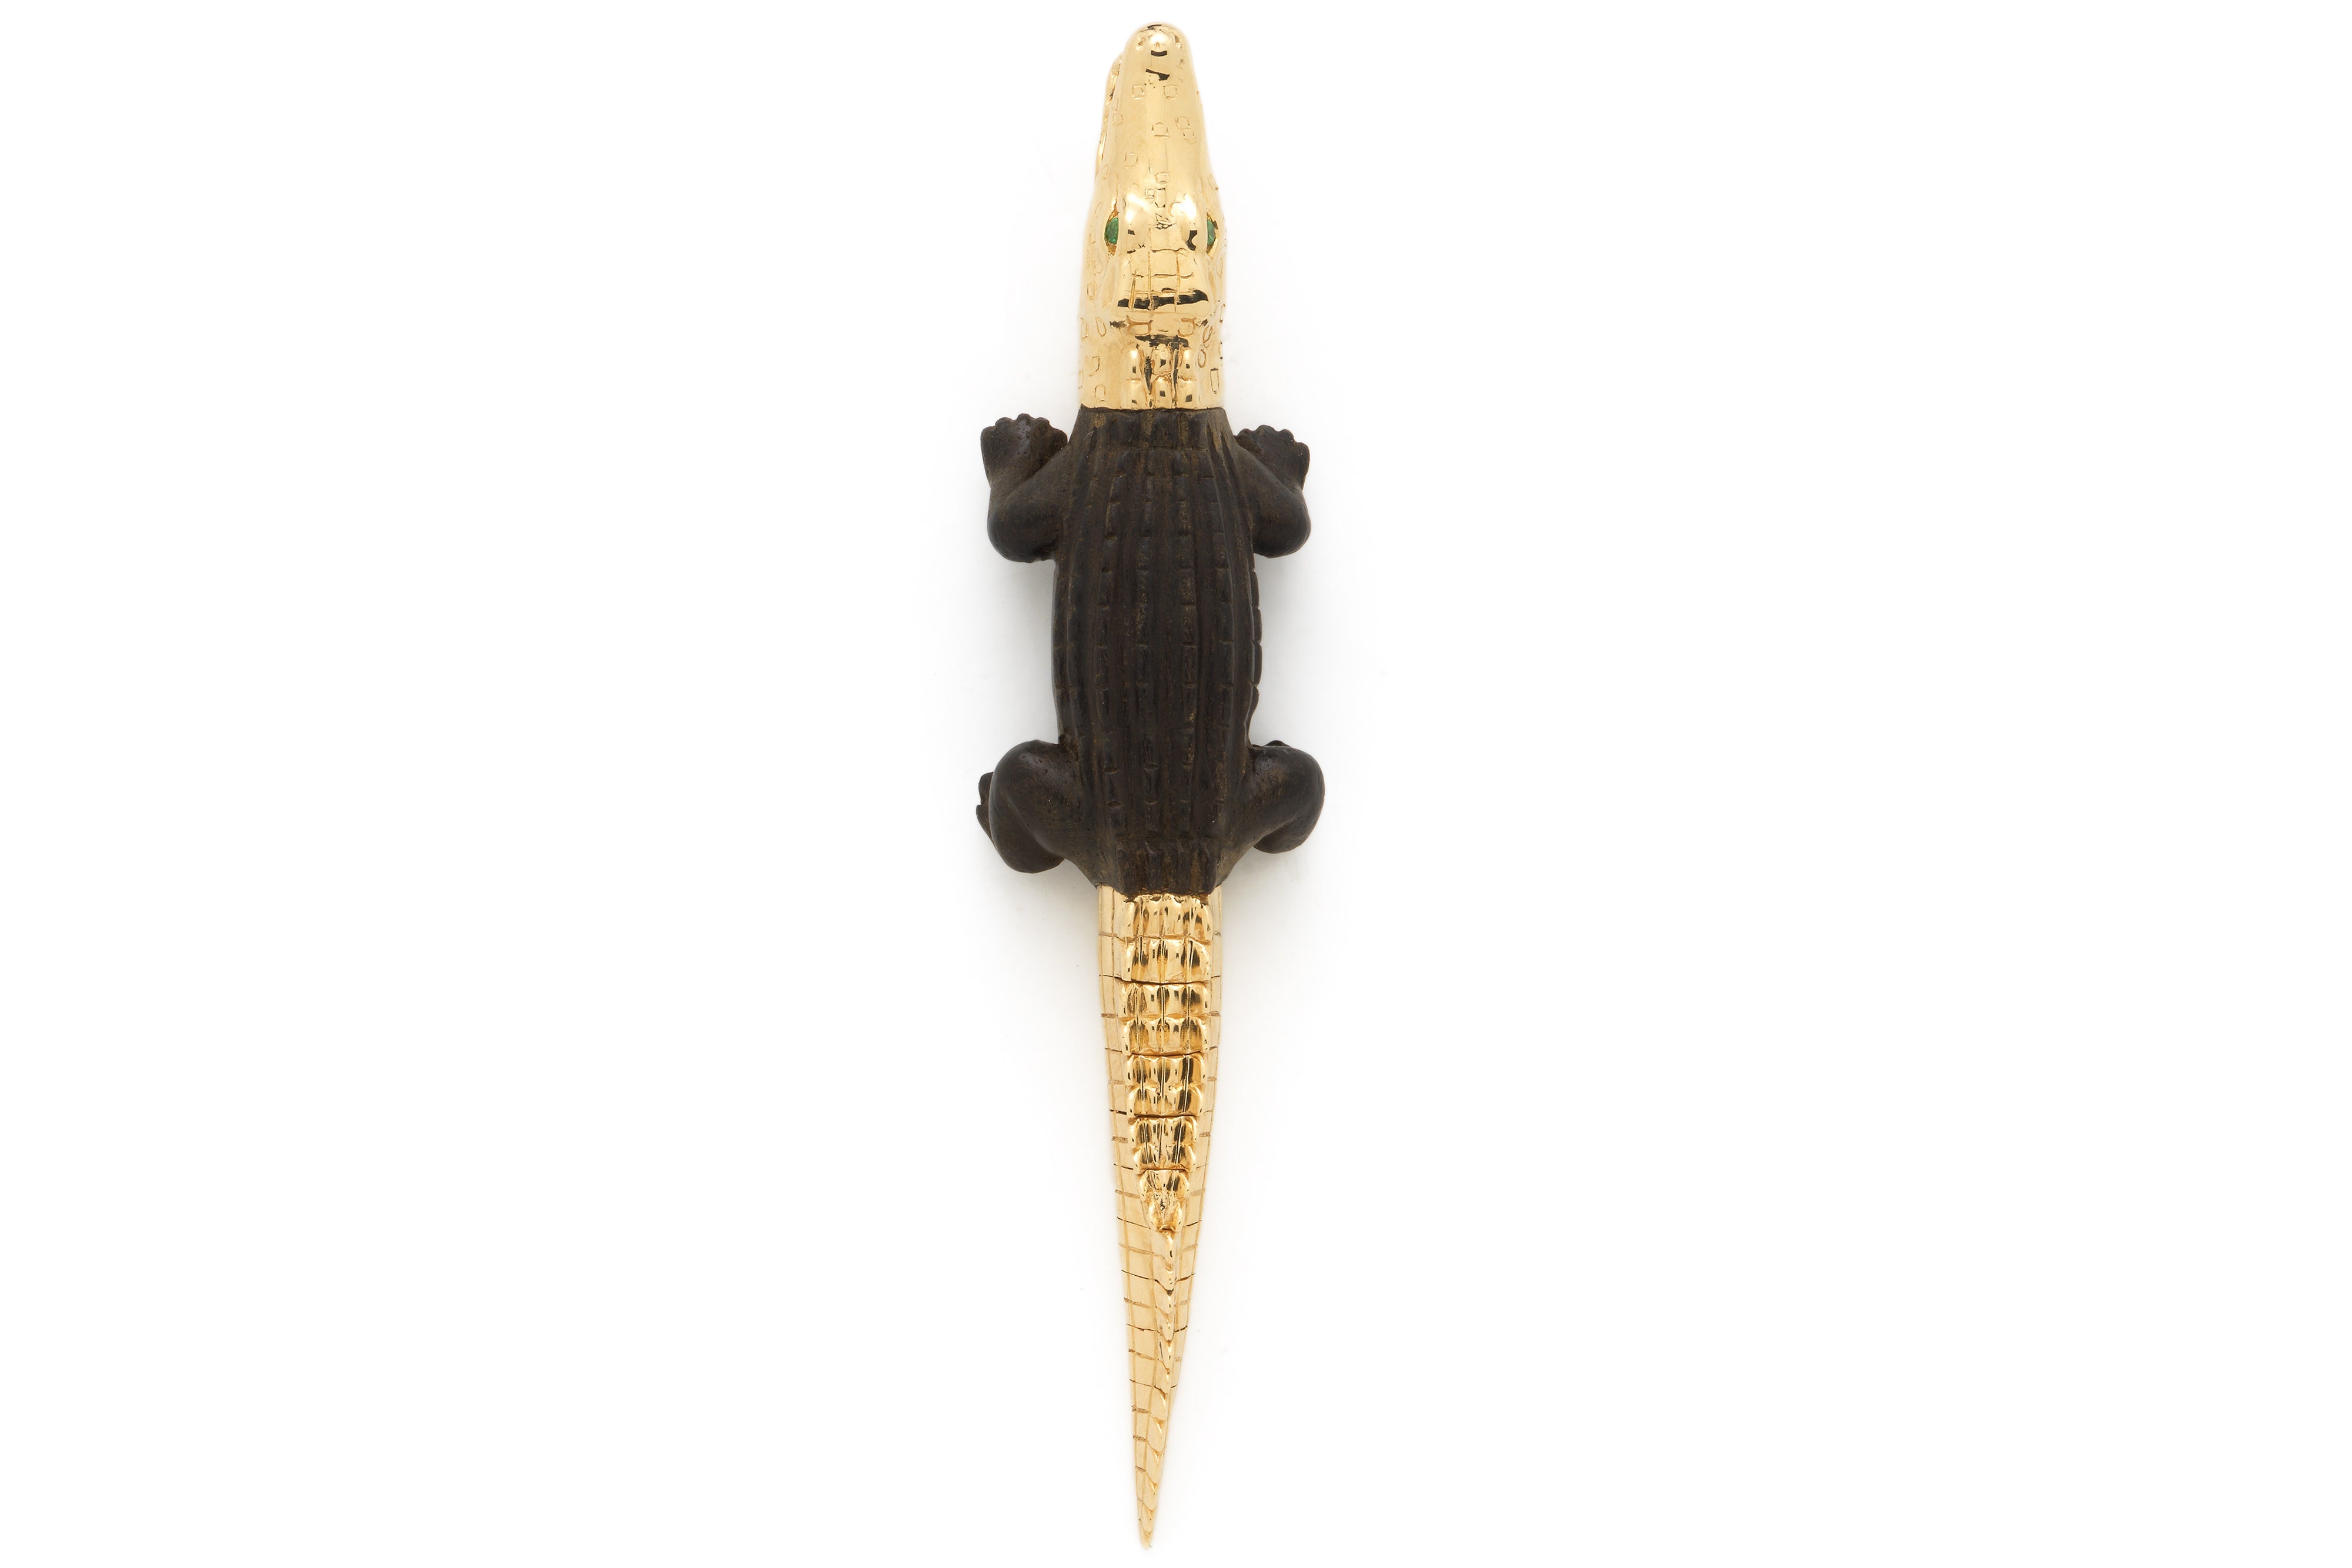 Handmade Wood Articulating Alligator Crocodile Toy Nepal